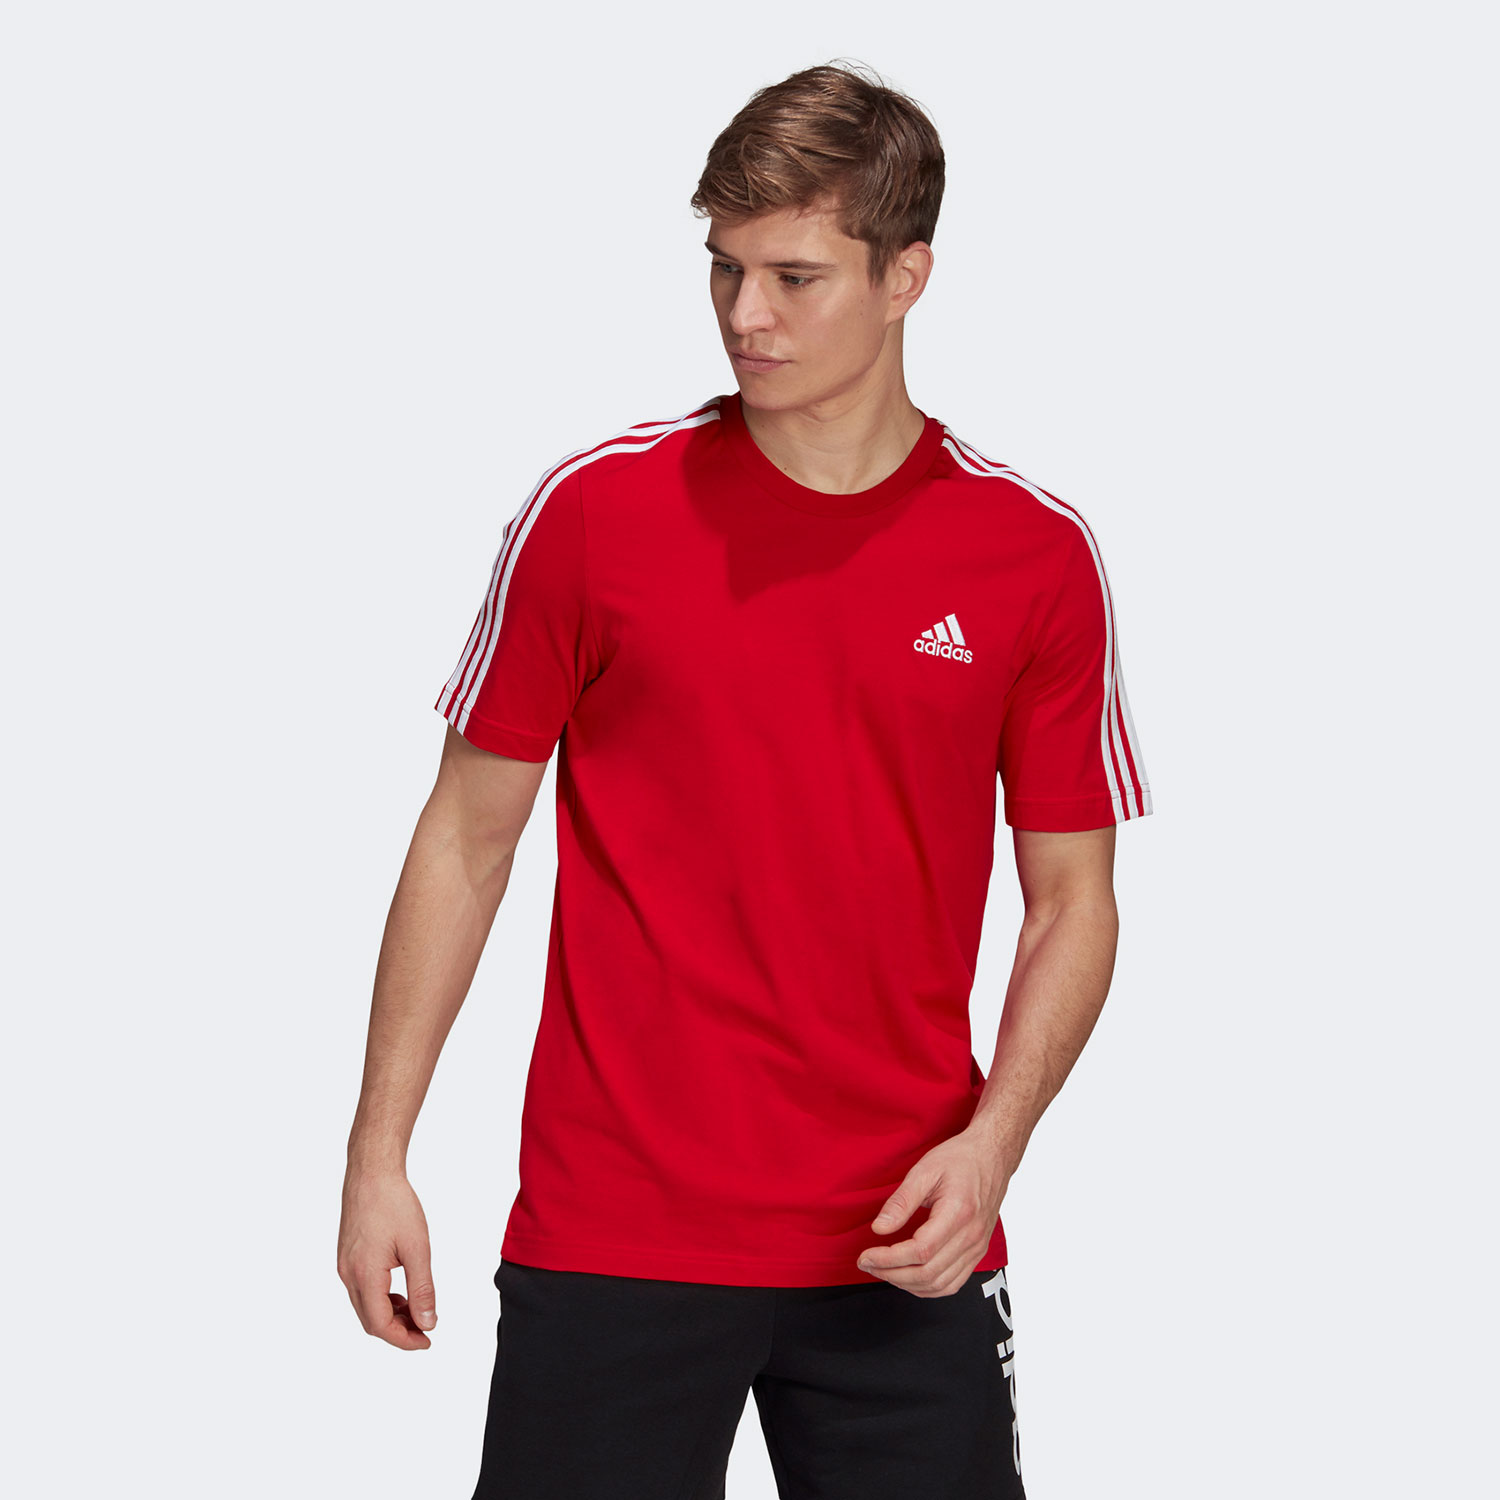 Adidas Performance T-shirt